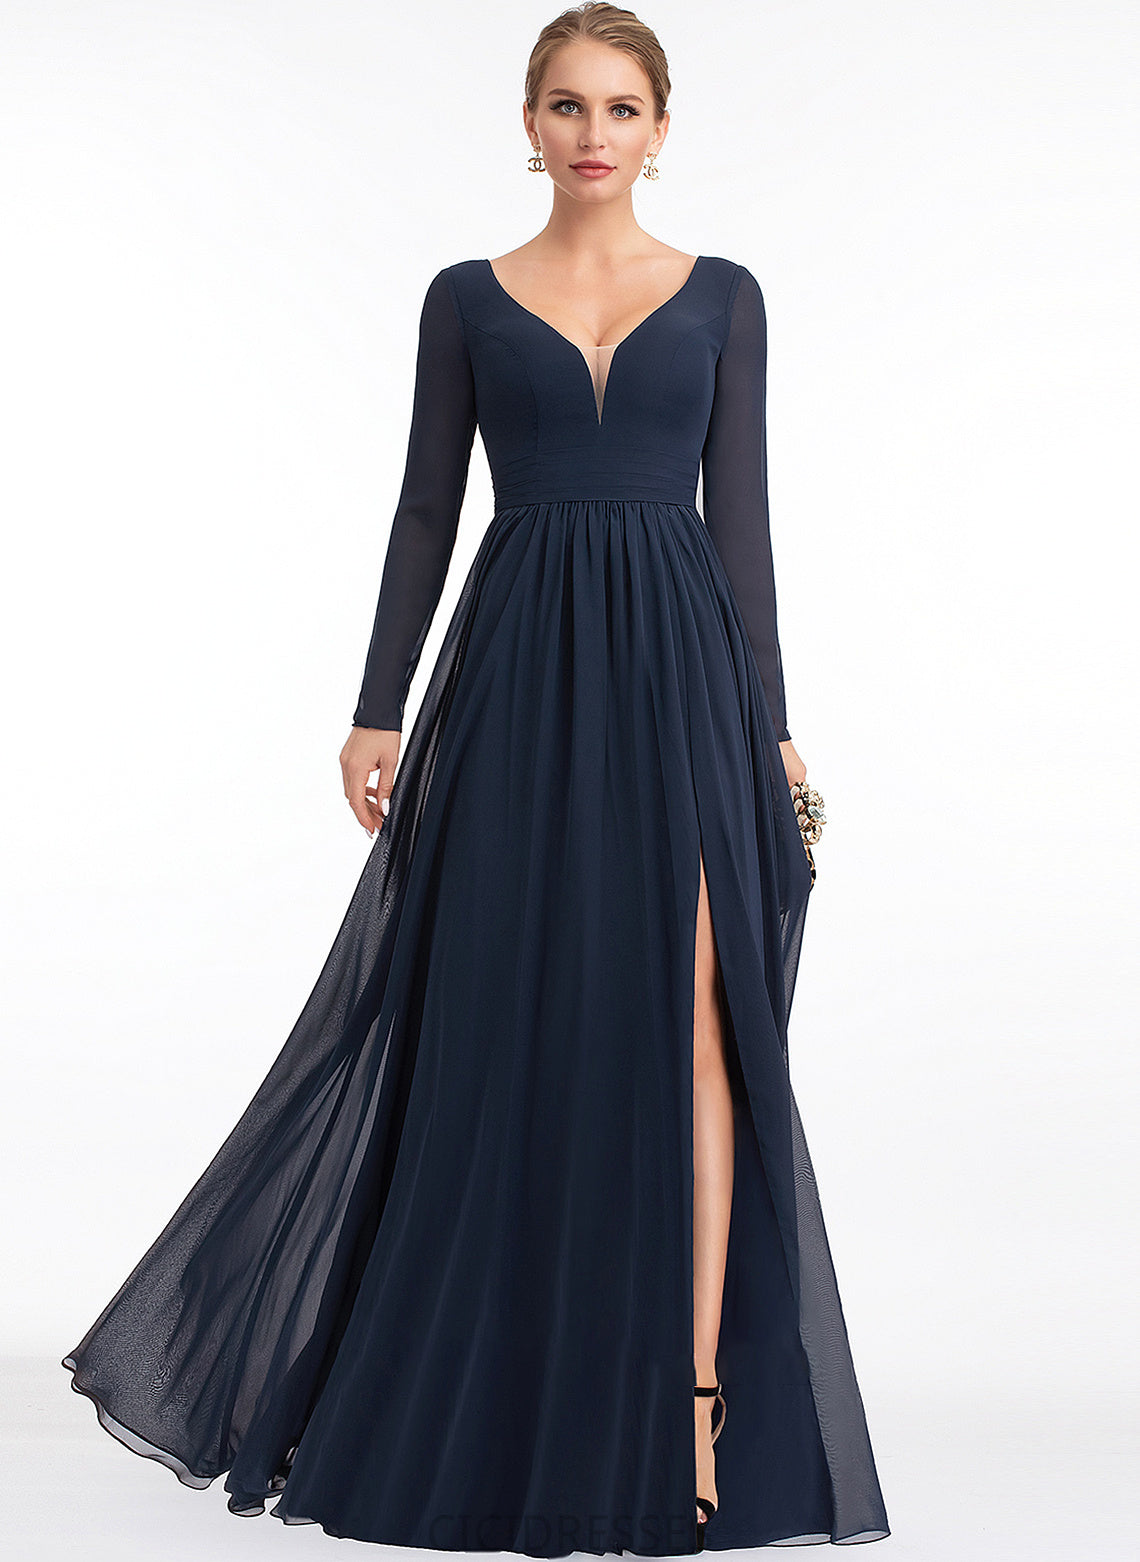 Fabric Neckline SplitFront Length A-Line Floor-Length Silhouette Embellishment V-neck Rosa Floor Length Sleeveless Bridesmaid Dresses